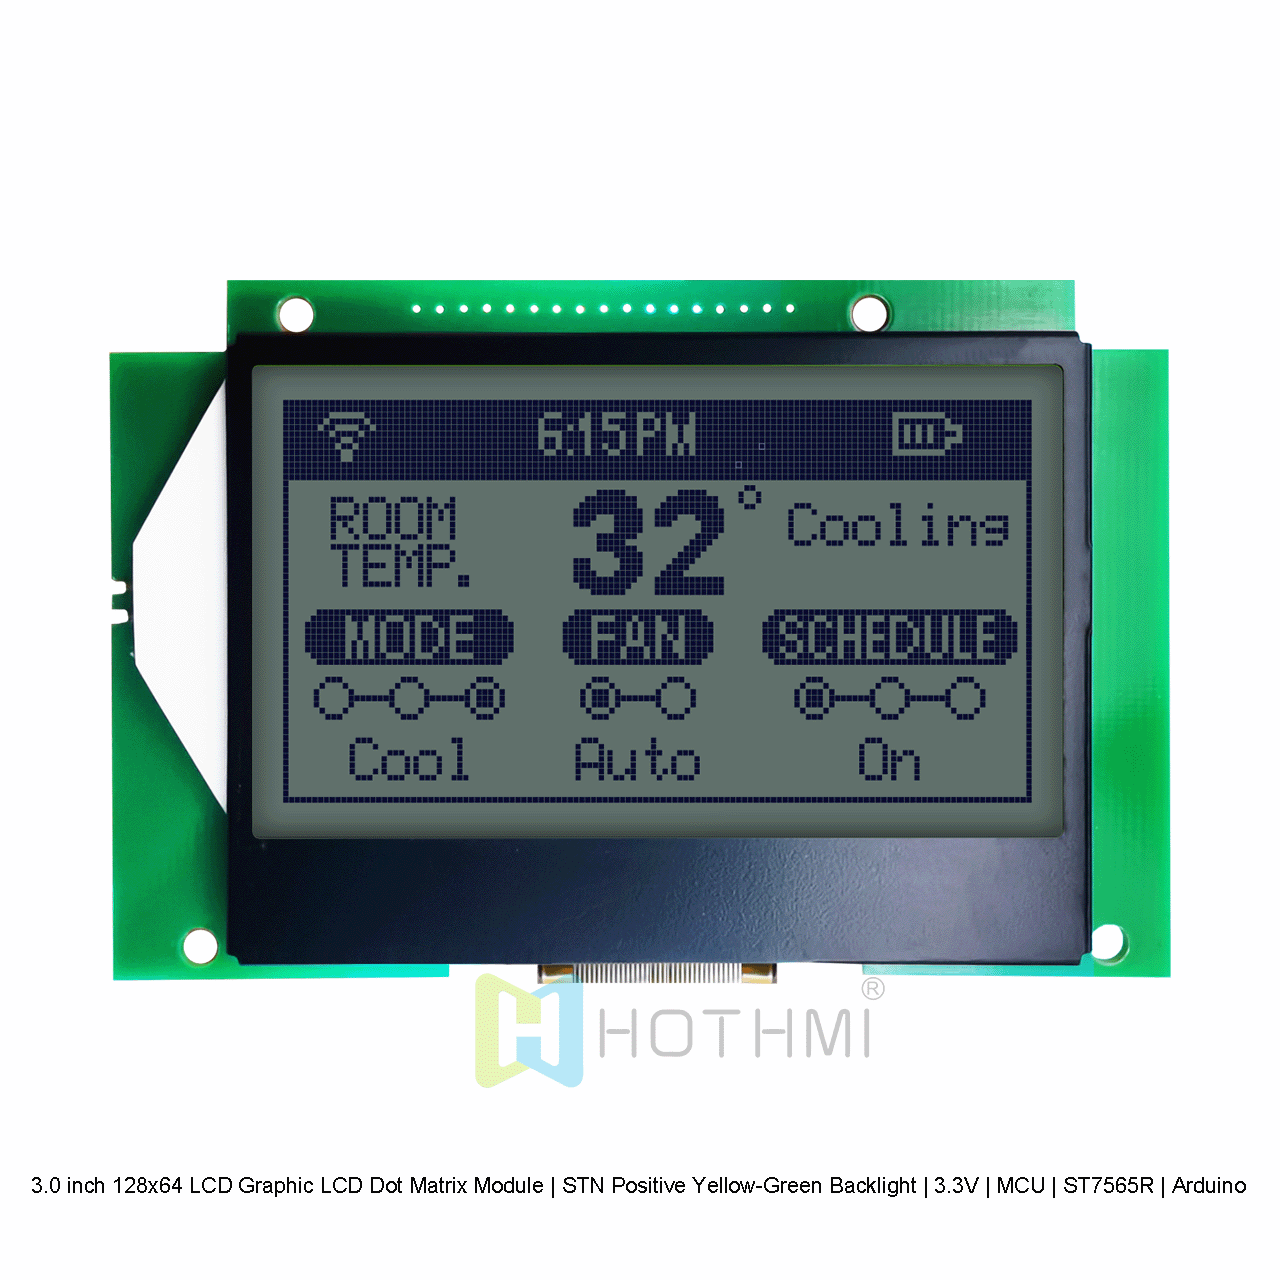 3.0 inch 128x64 LCD Graphic LCD Dot Matrix Module | STN Positive Yellow-Green Backlight | 3.3V | MCU | ST7565R | Arduino